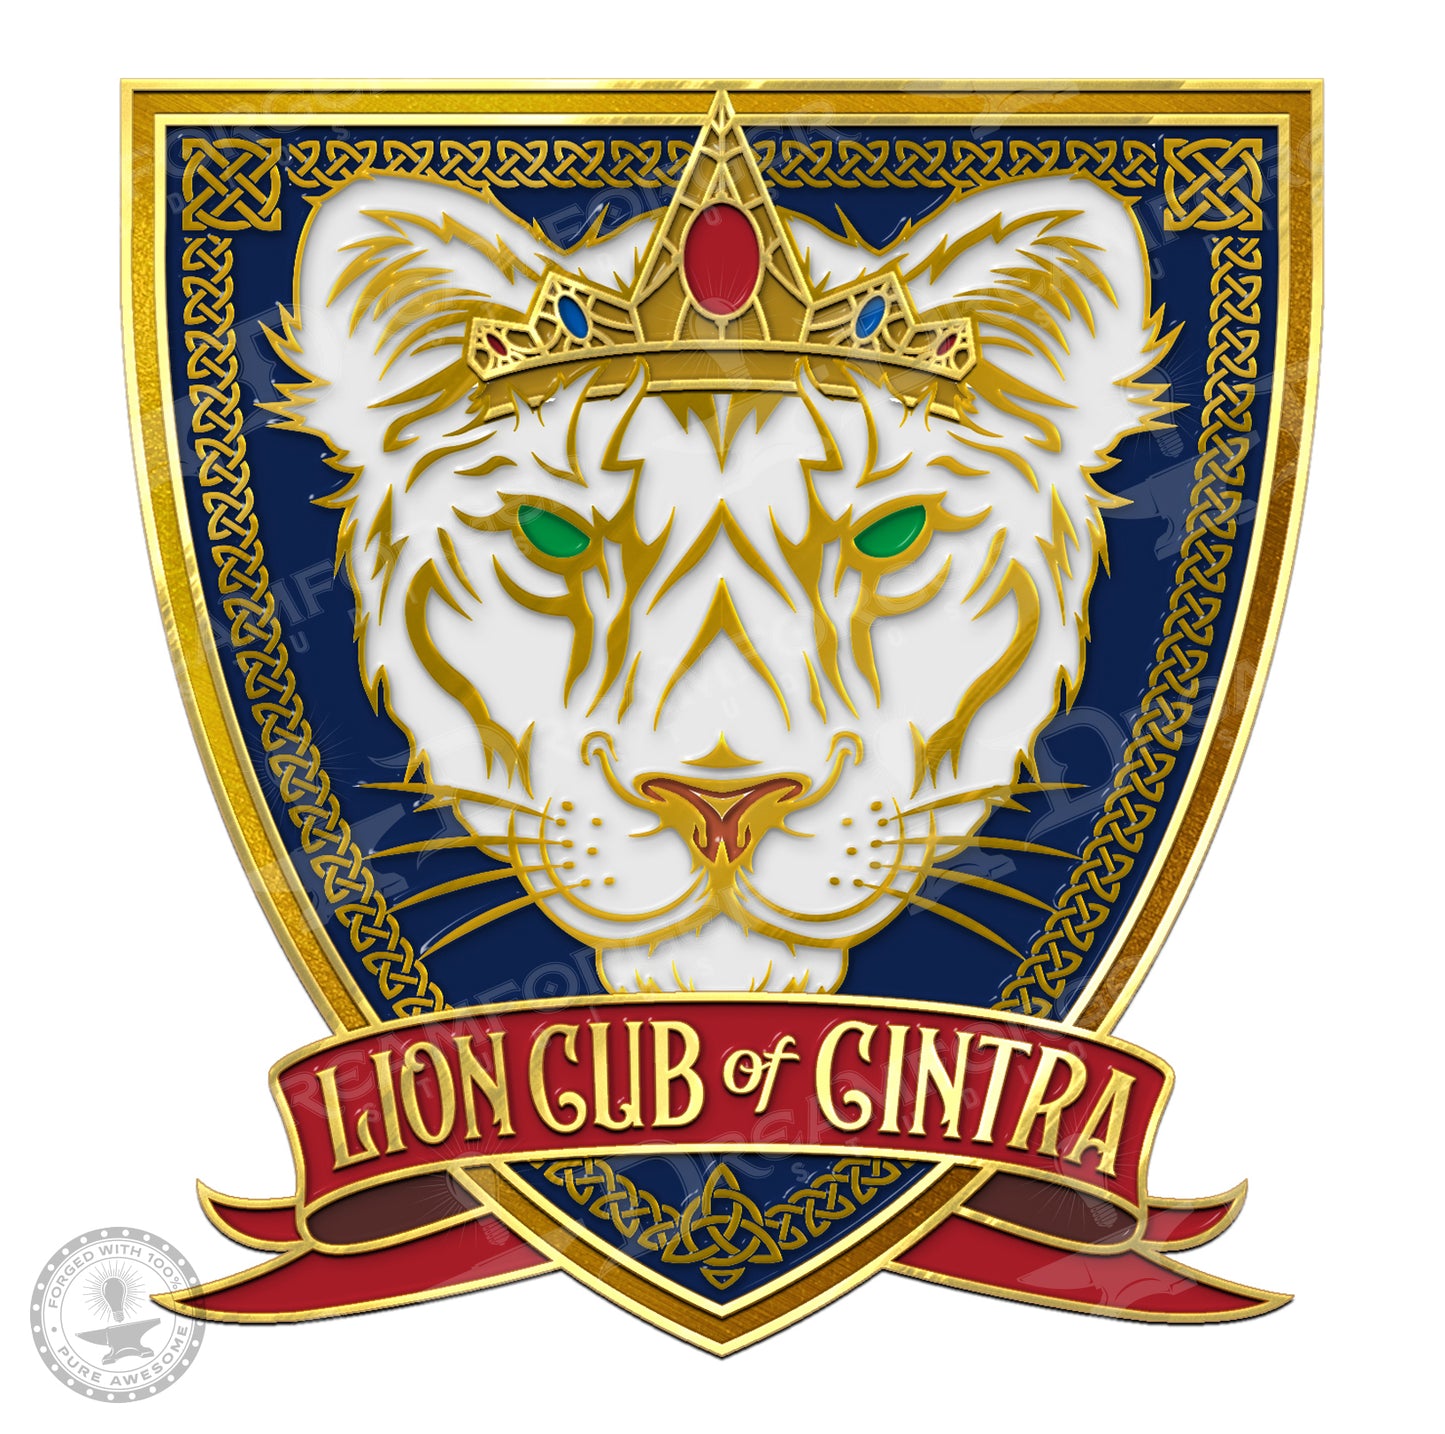 "Lion Cub of Cintra" Metal Lapel Pin